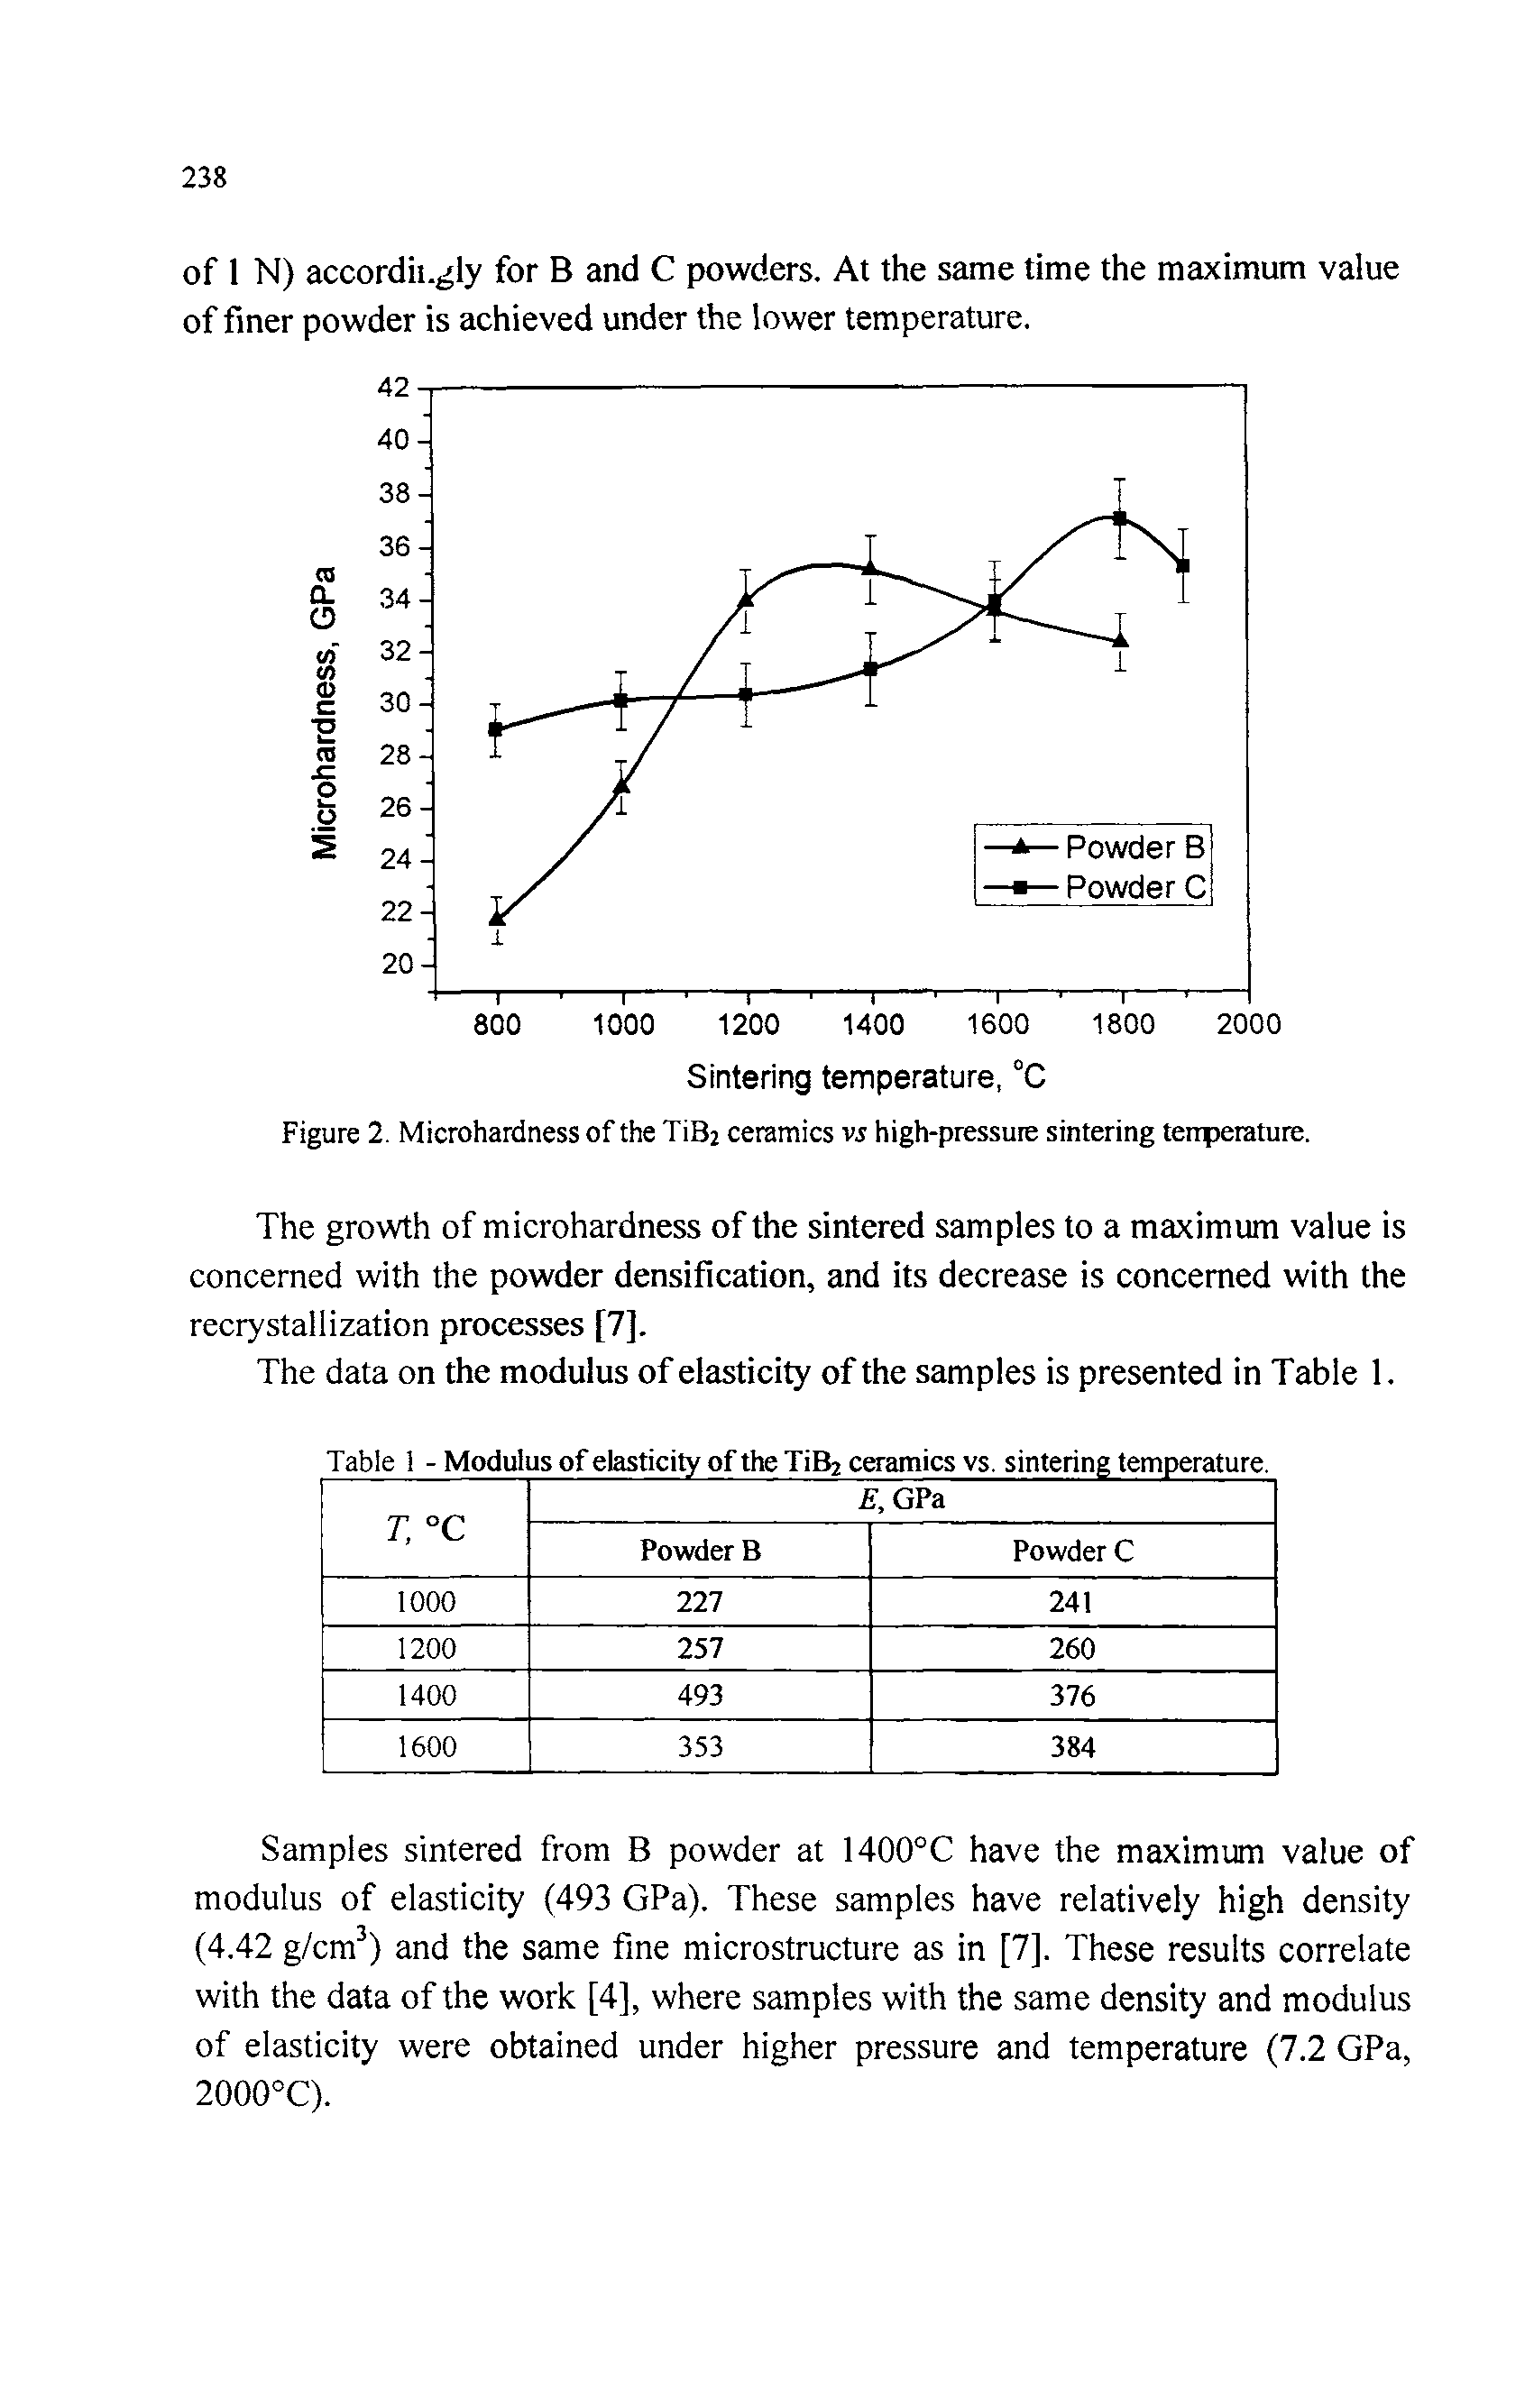 Figure 2. Microhardness of the TiB2 ceramics vj high-pressure sintering tenperature.